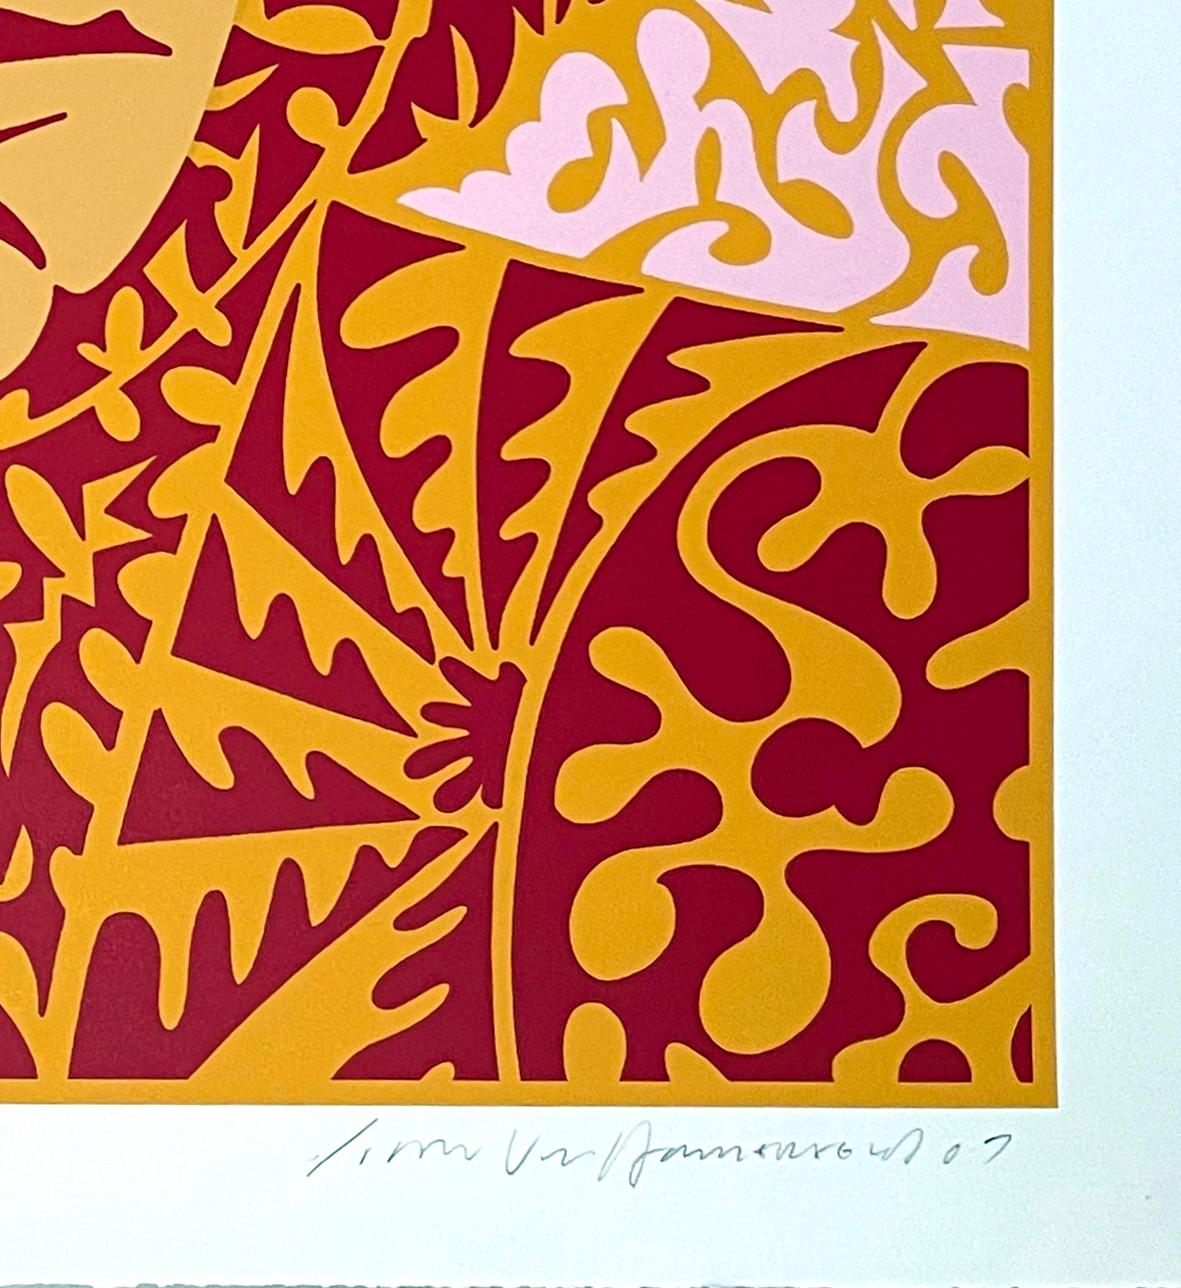 Titel: John Lennon
Künstler: John Van Hamersveld
Medium: Farbe SERIGRAPH
Bedruckstoff: COVENTRY LAPPEN 320 G/M²
Papierformat: 34,25″ x 44